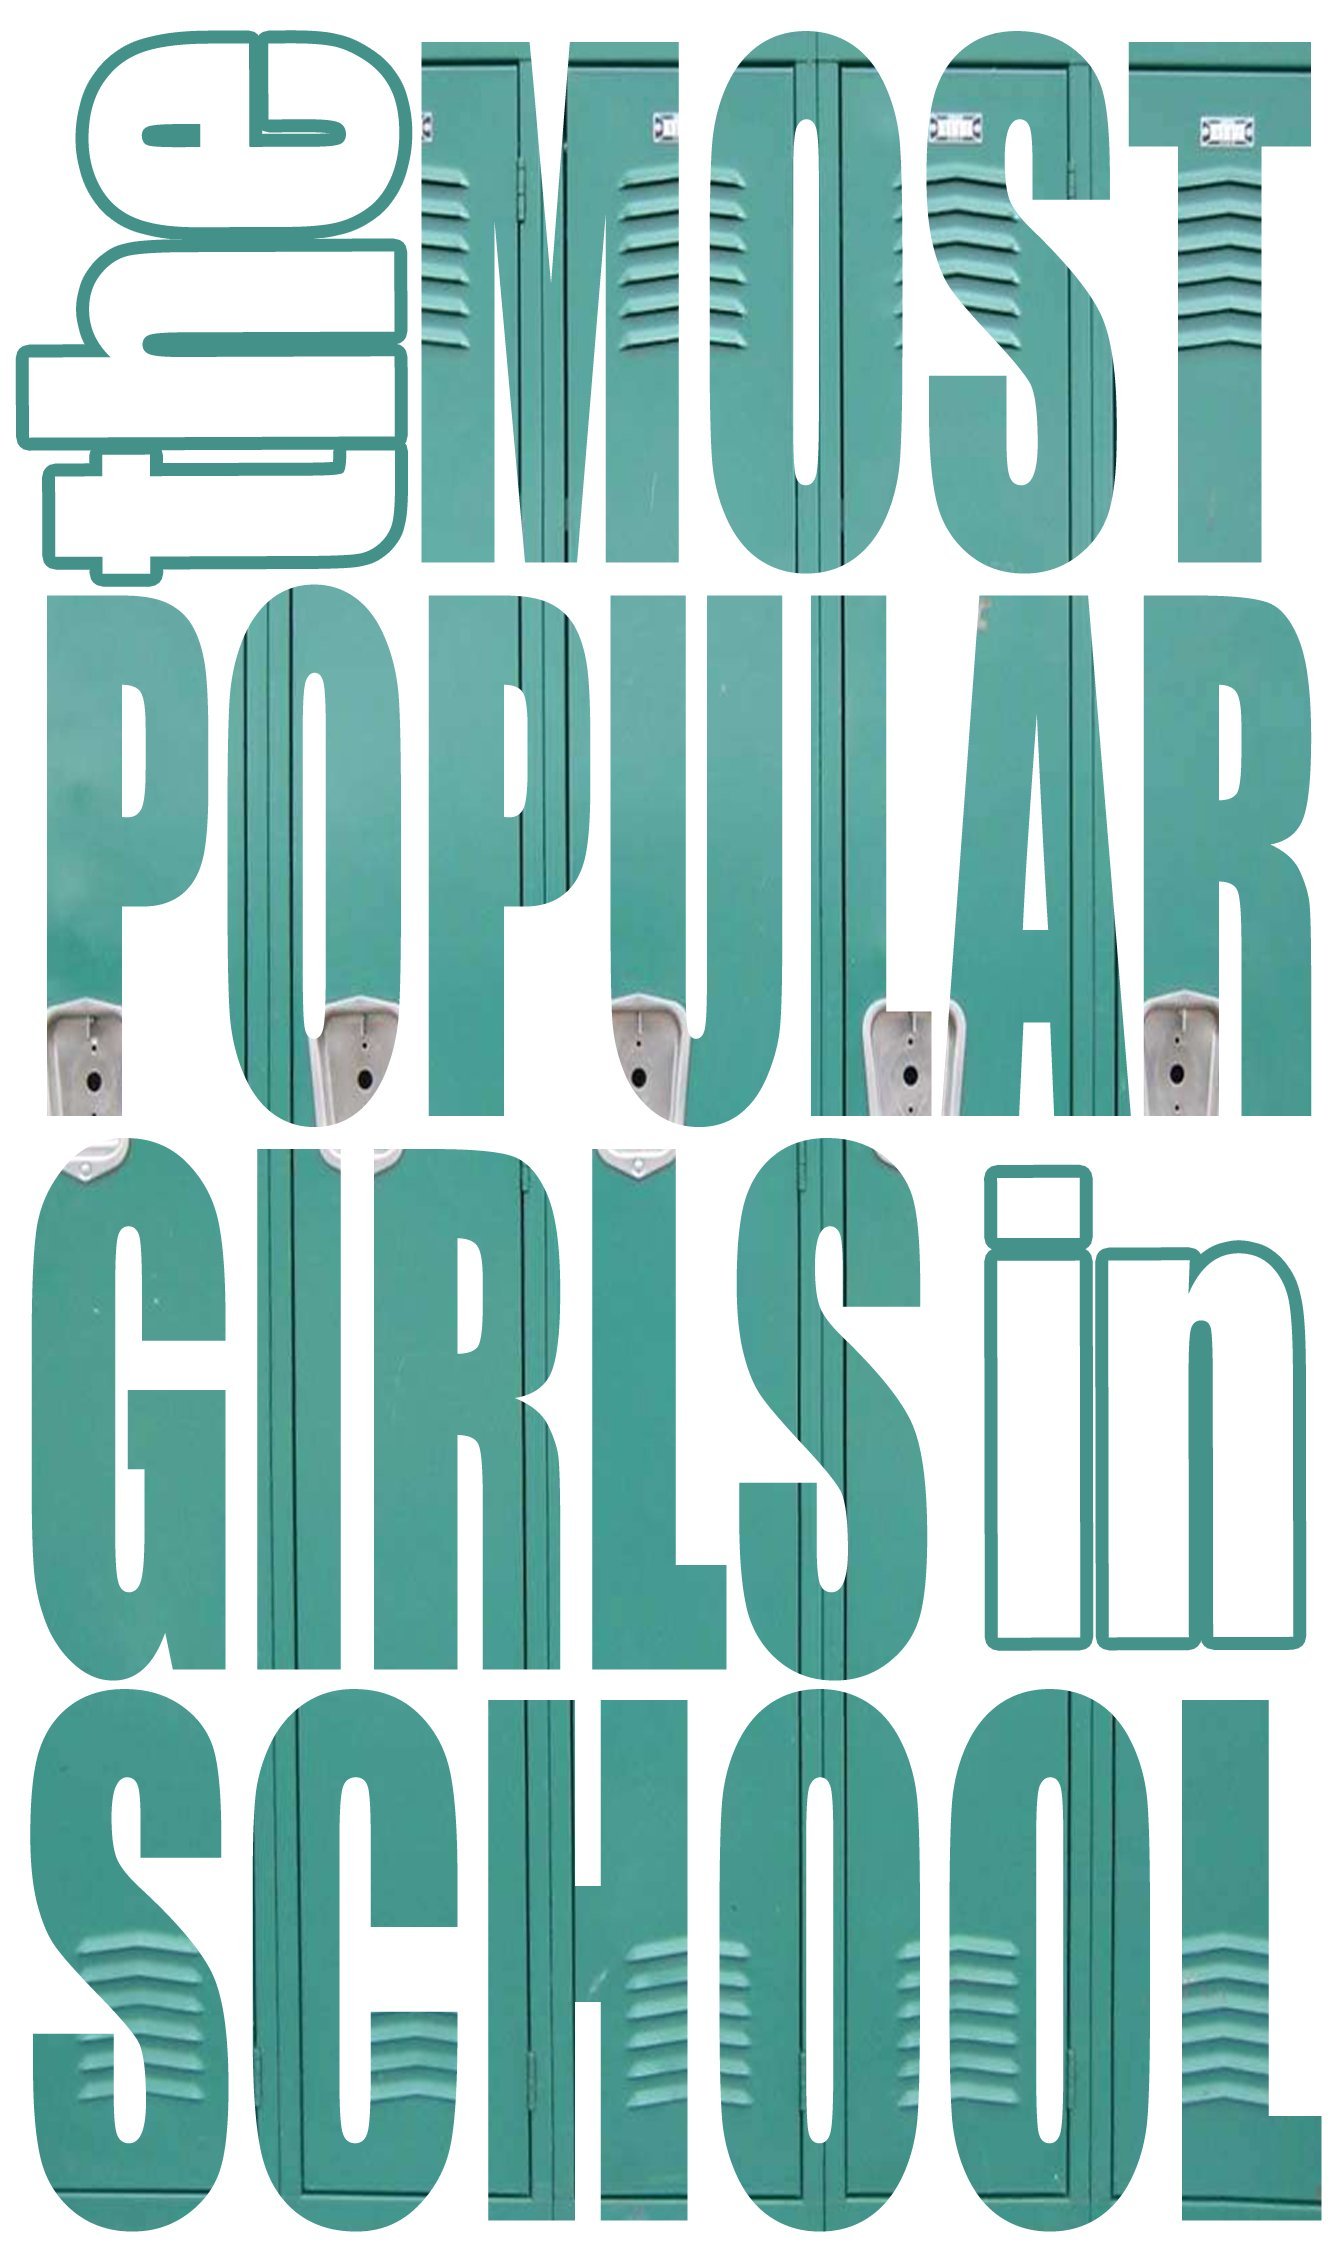 The Most Popular Girls in School